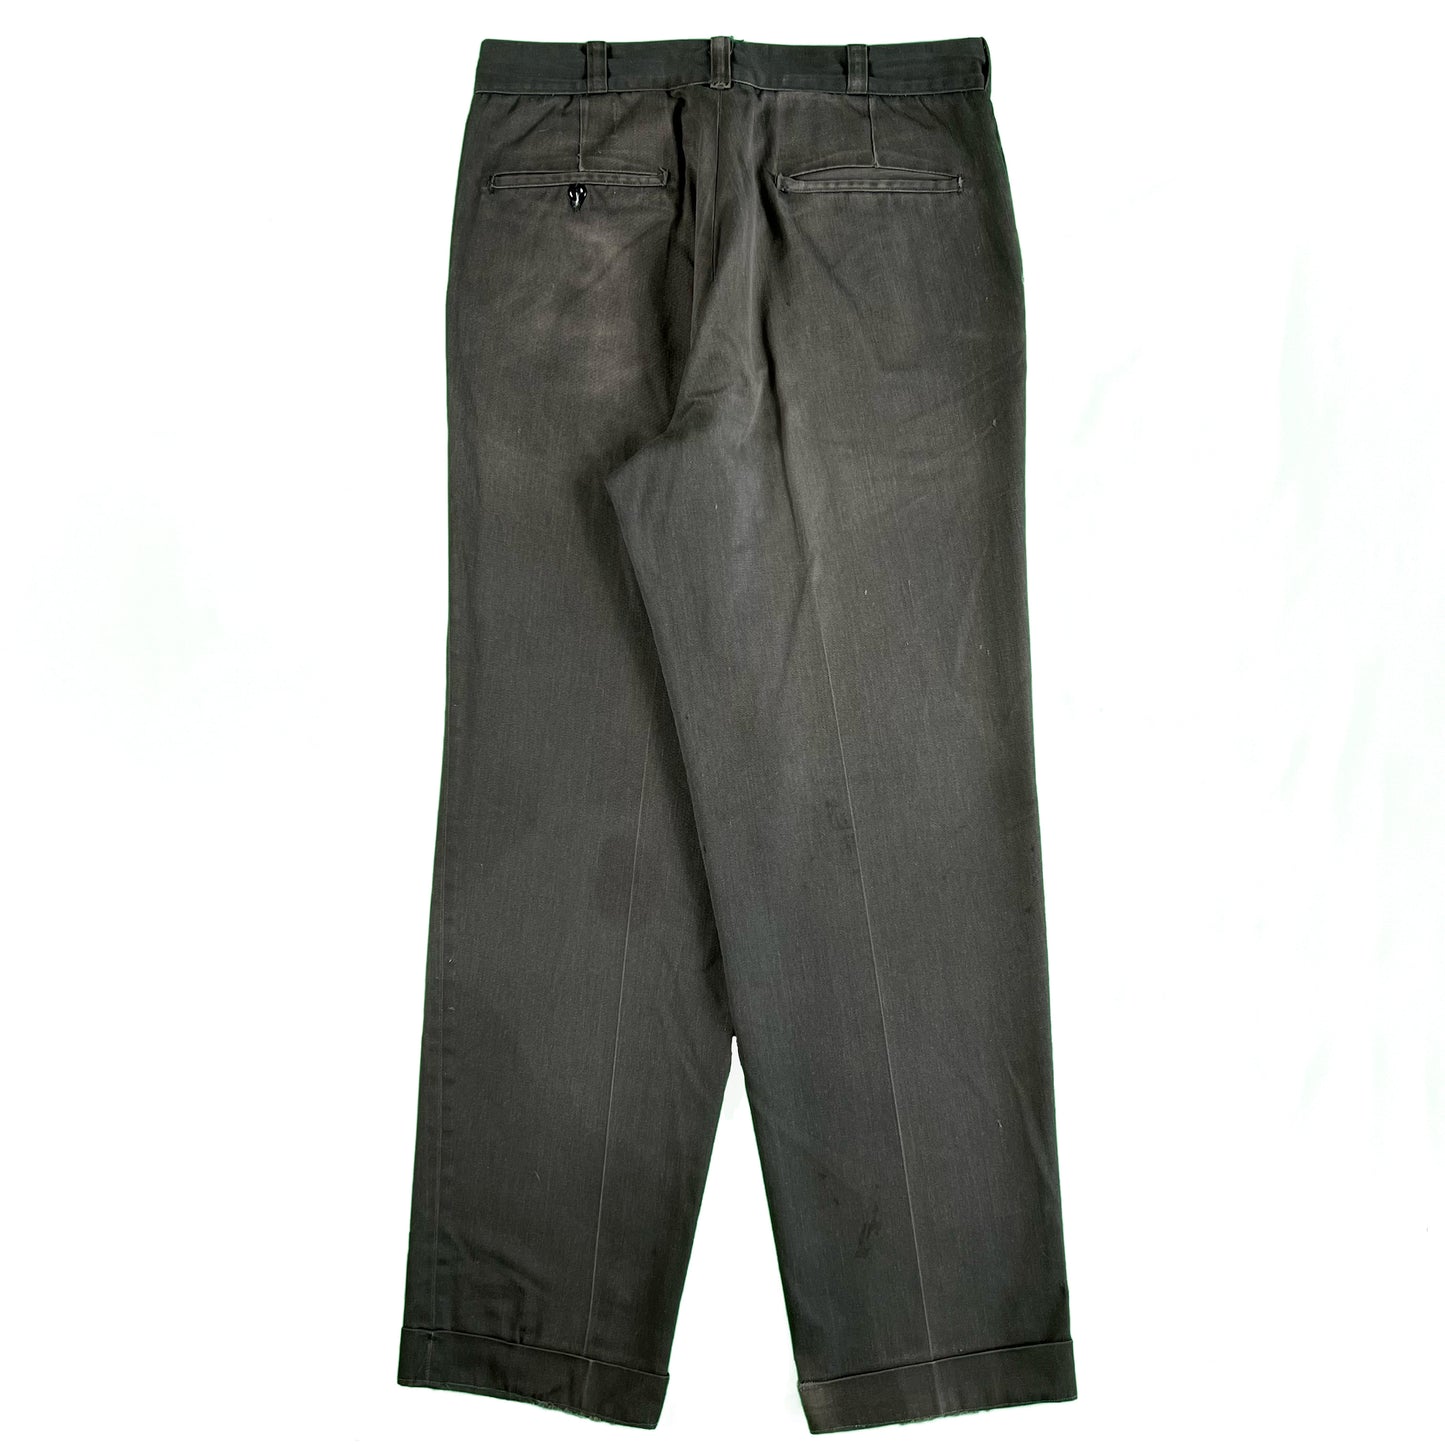 60s Faded Black/Grey Sears Work Pants-30x30,31x31